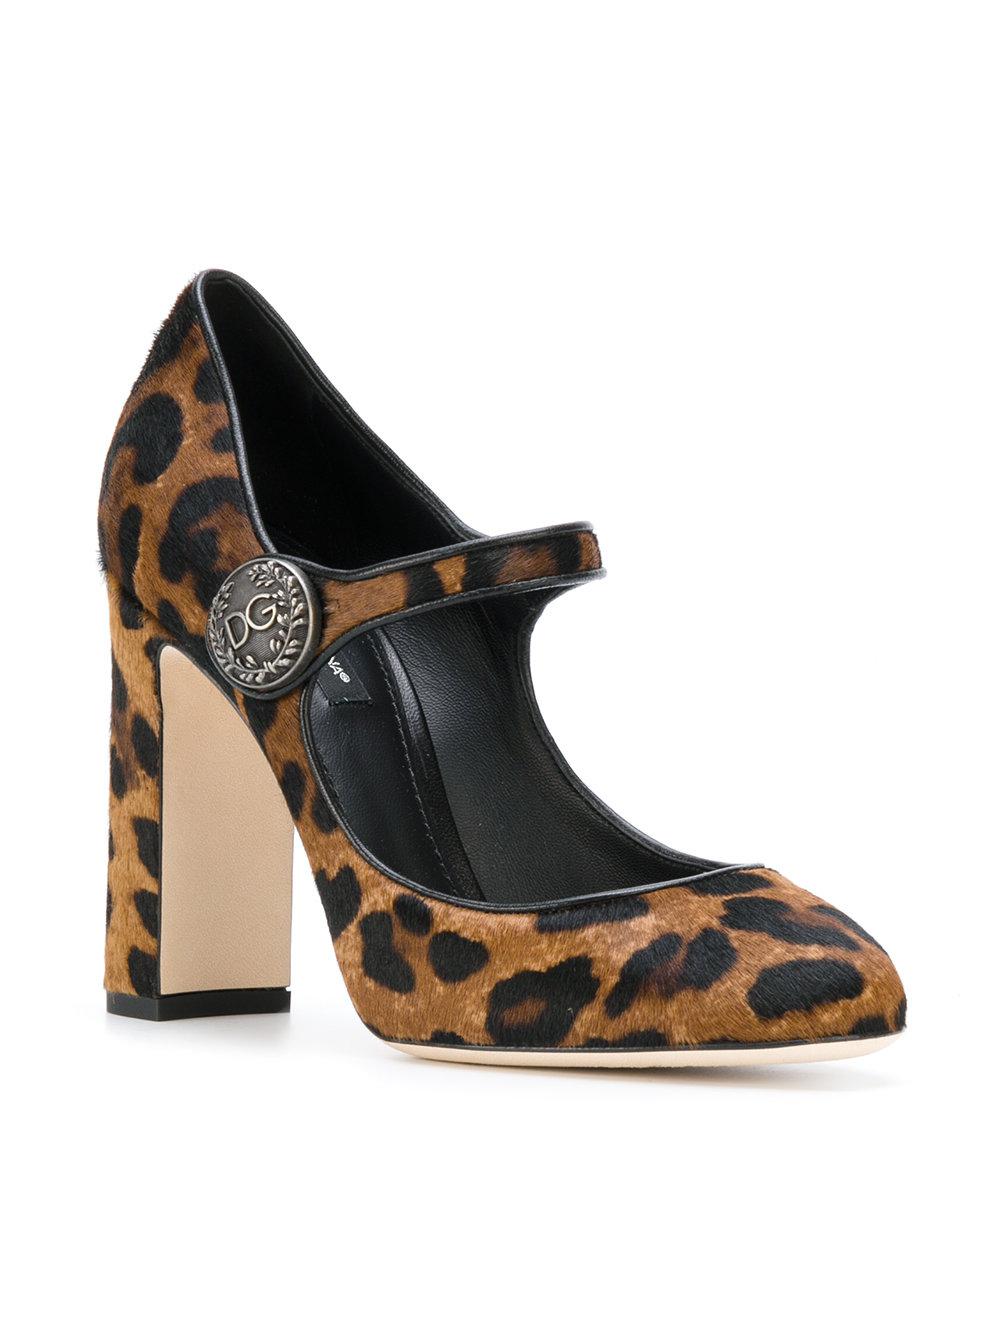 Lyst - Dolce & Gabbana Leopard Print Mary Jane Pumps in Brown